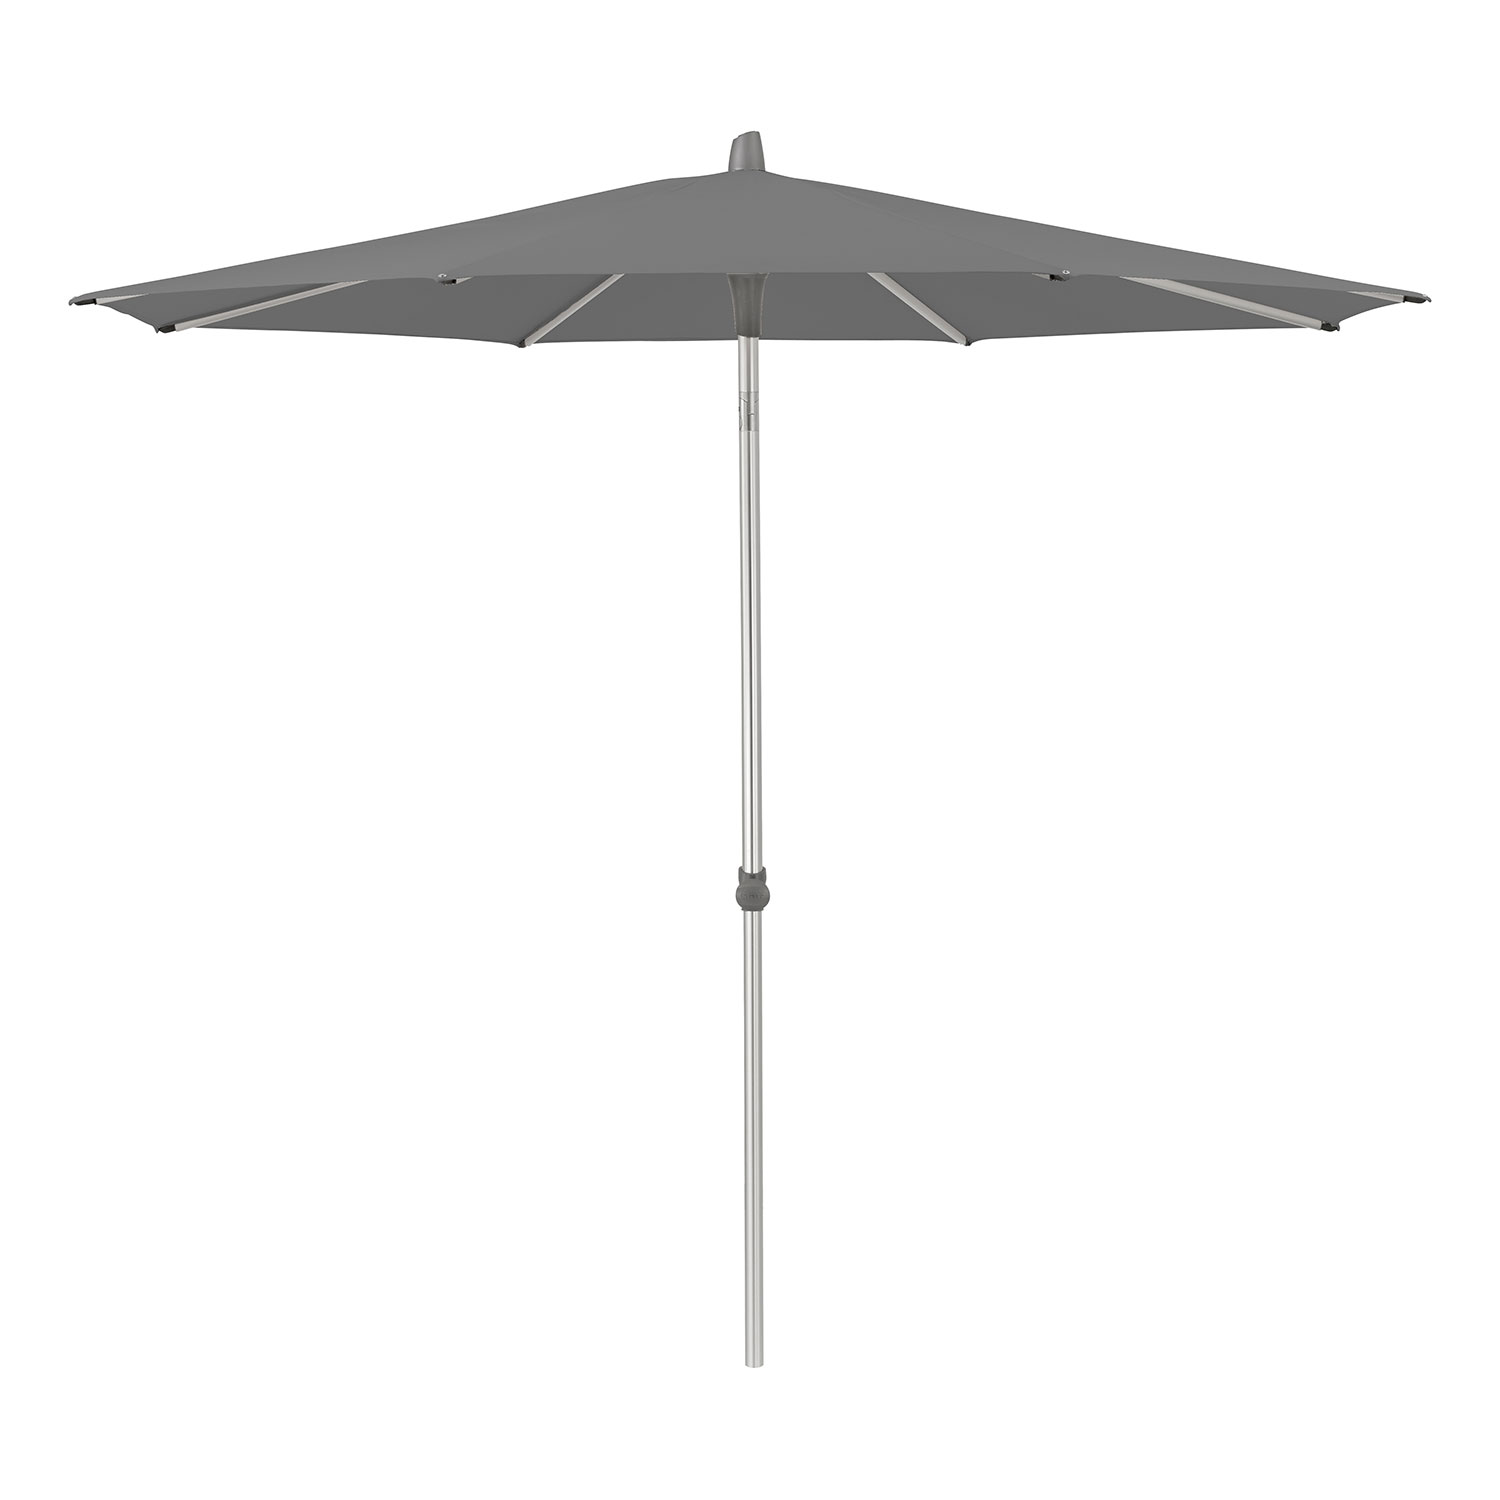 Glatz Alu-smart parasoll 220 cm kat.5 684 urban shadow